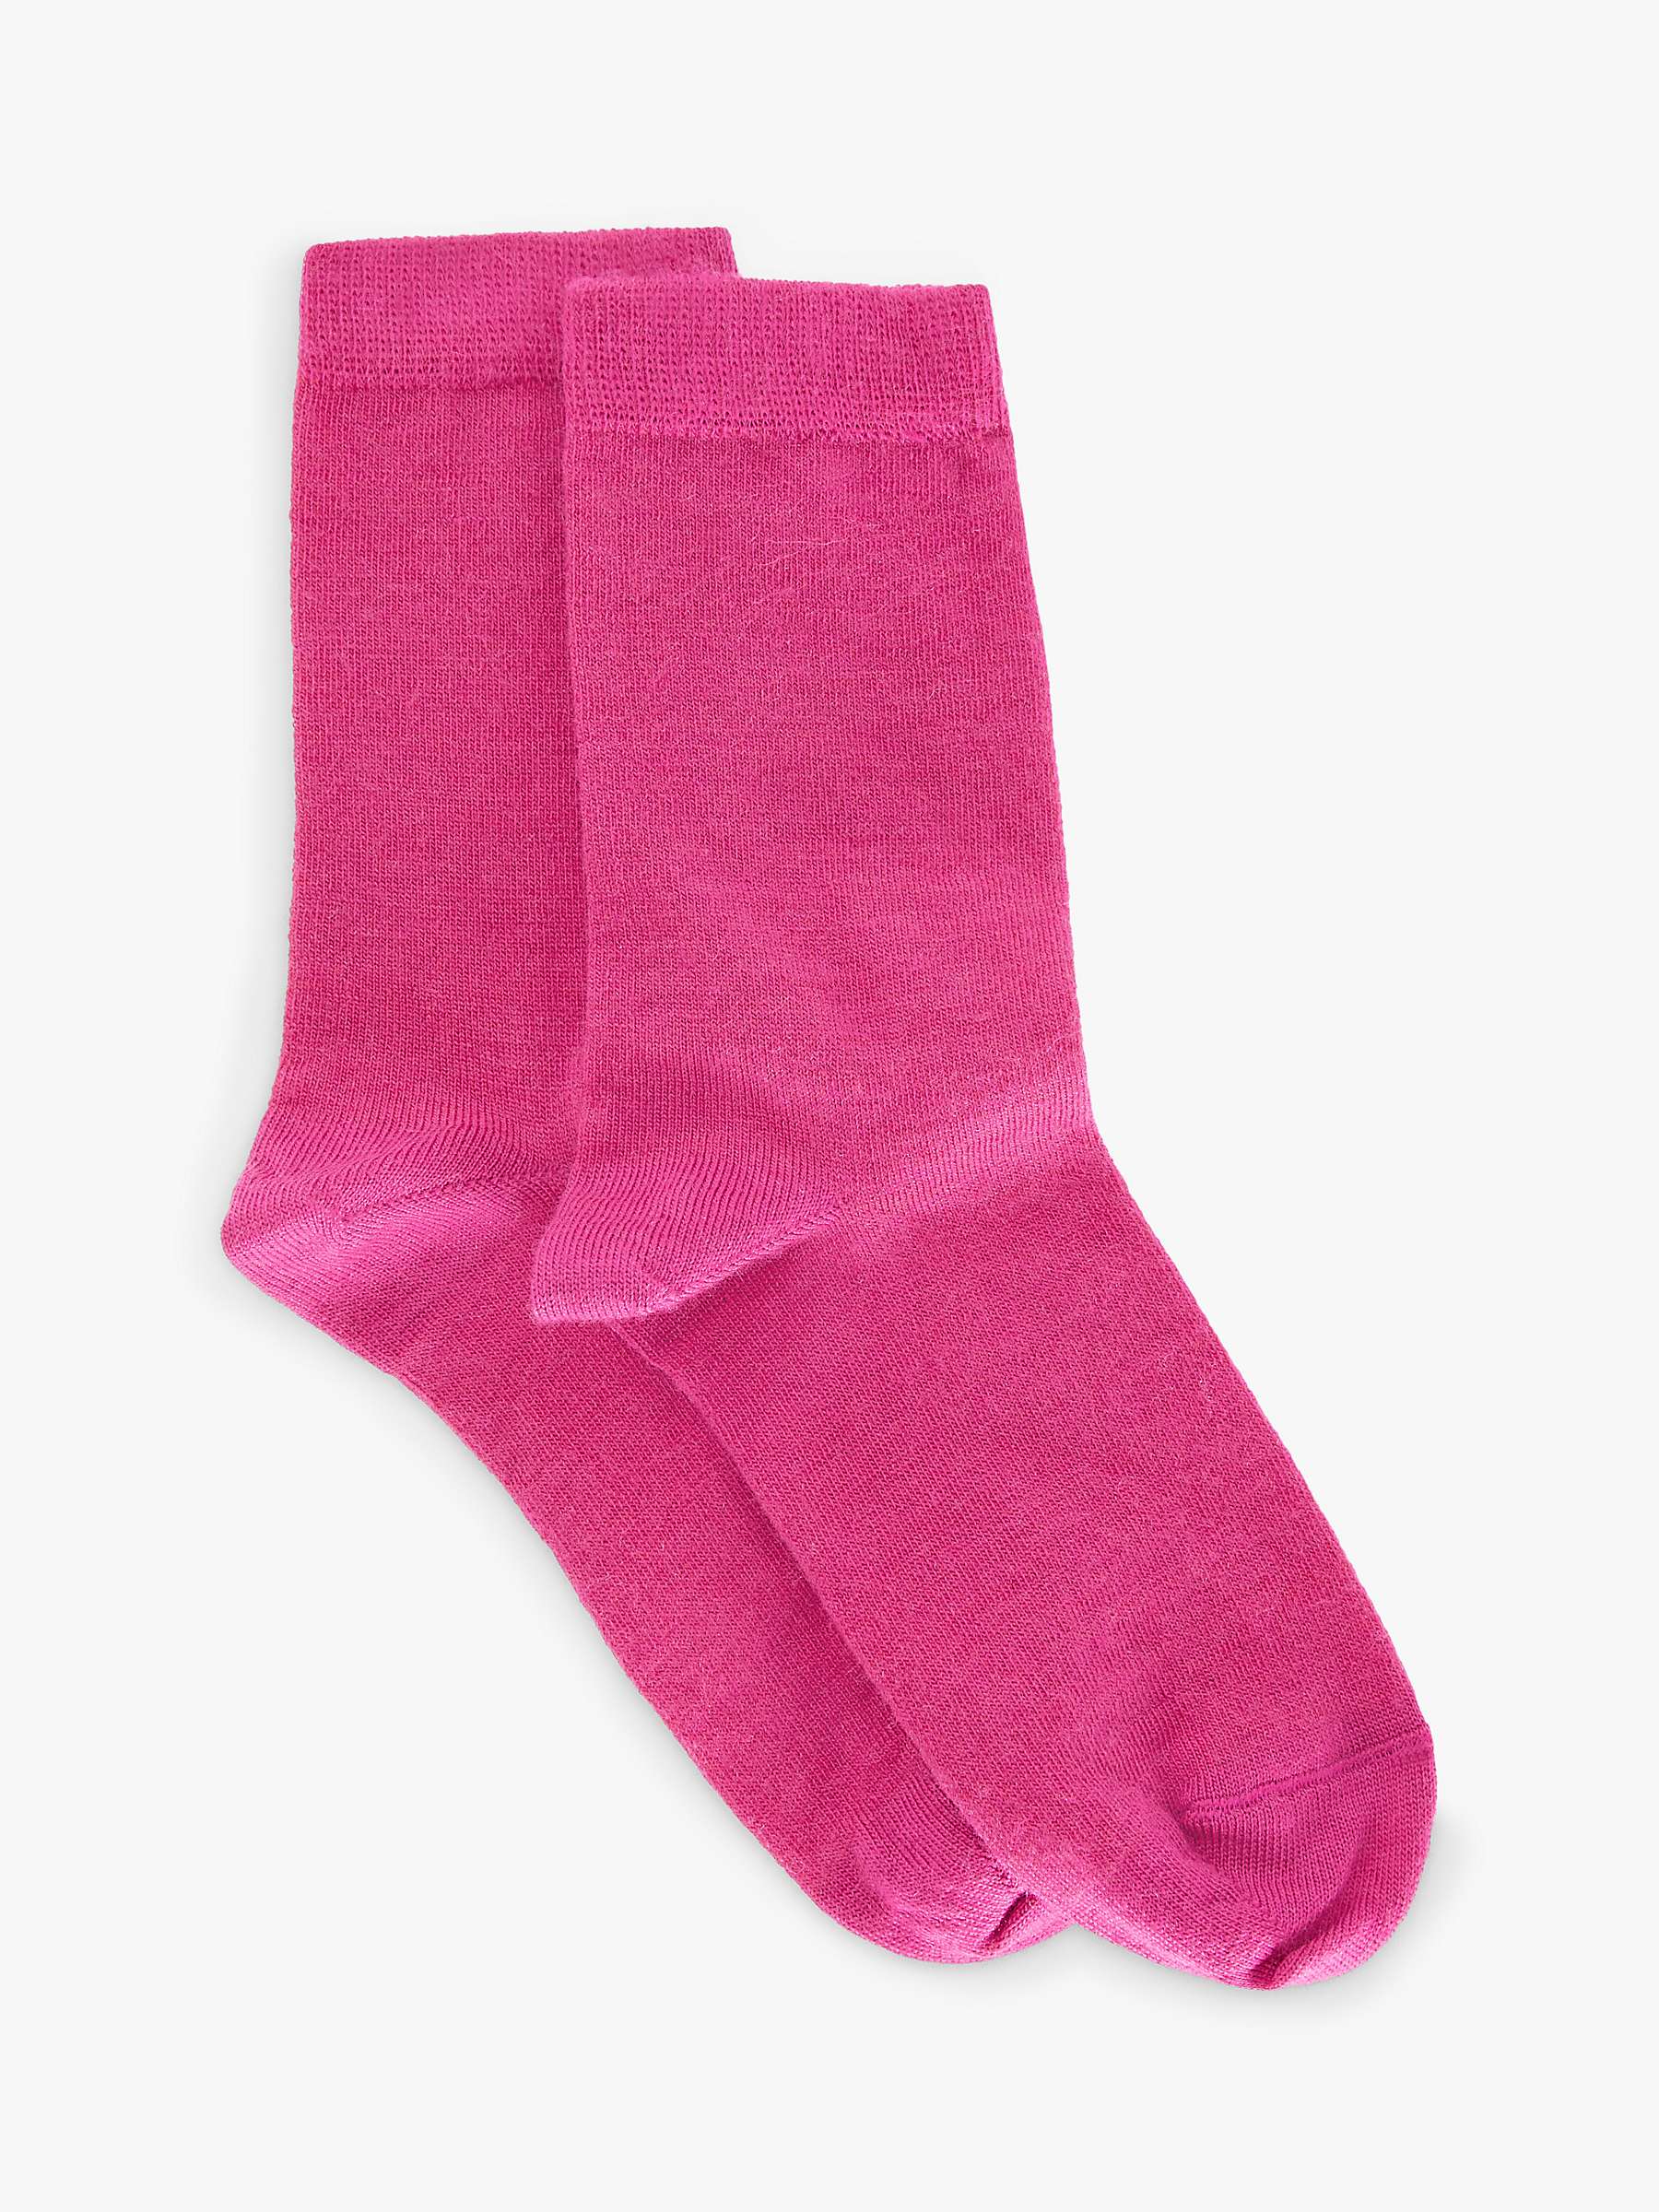 John Lewis Merino Wool Rich Ankle Socks, Pack of 2, Pink at John Lewis ...